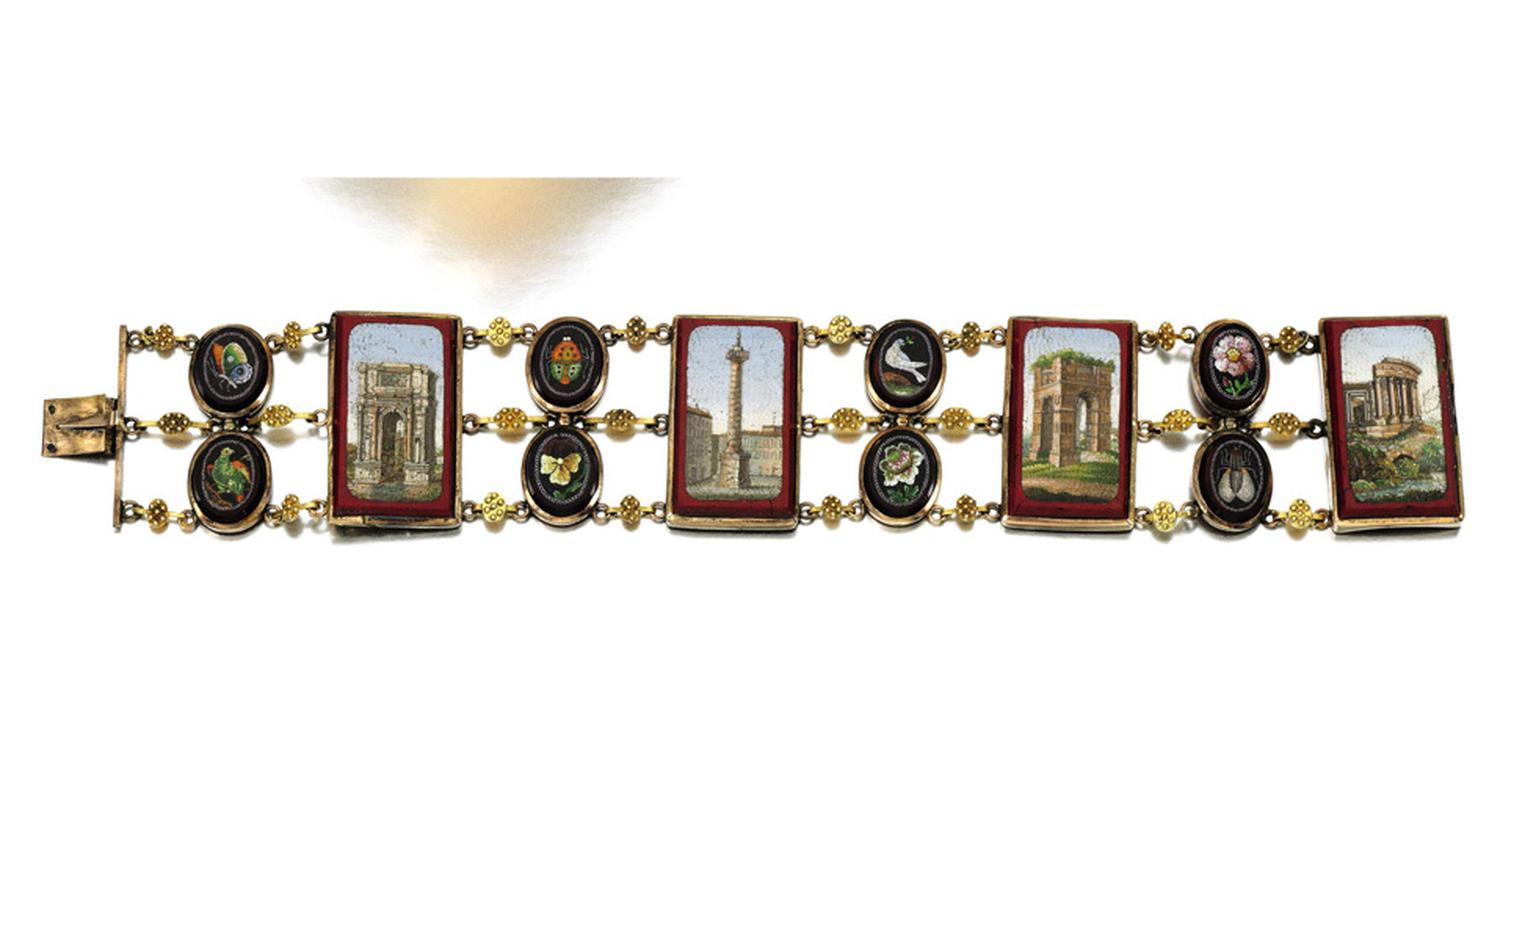 Lot 24. Microsmosaic bracelet, mid 19th Century. Estimate £3,000-£5,000